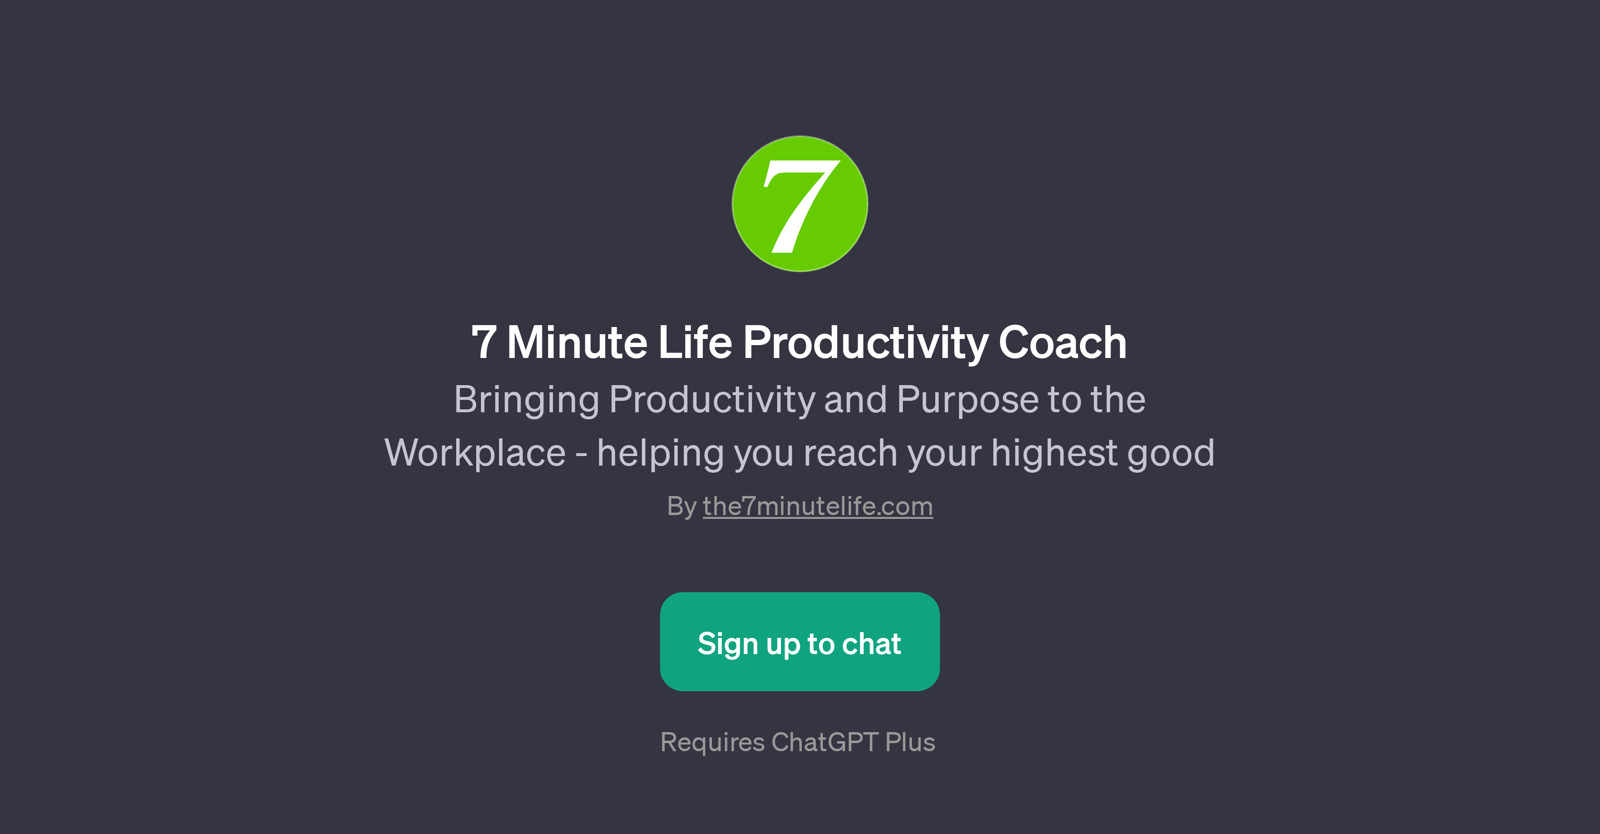 7 Minute Life Productivity Coach website